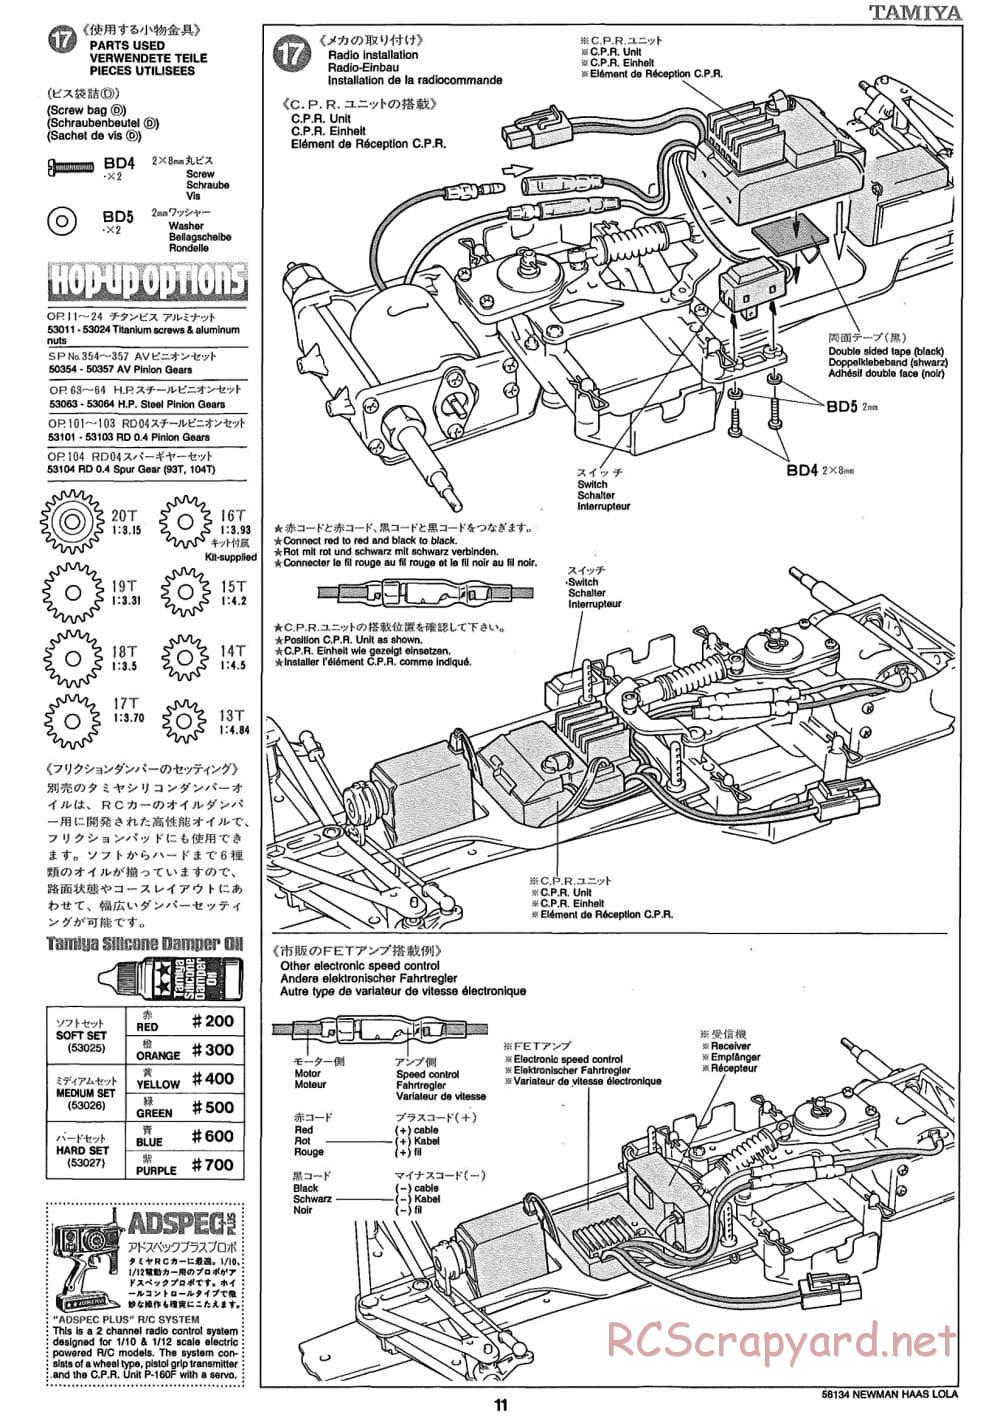 Tamiya - Newman Haas K-Mart Texaco Lola T93/00 Ford - F103L Chassis - Manual - Page 11